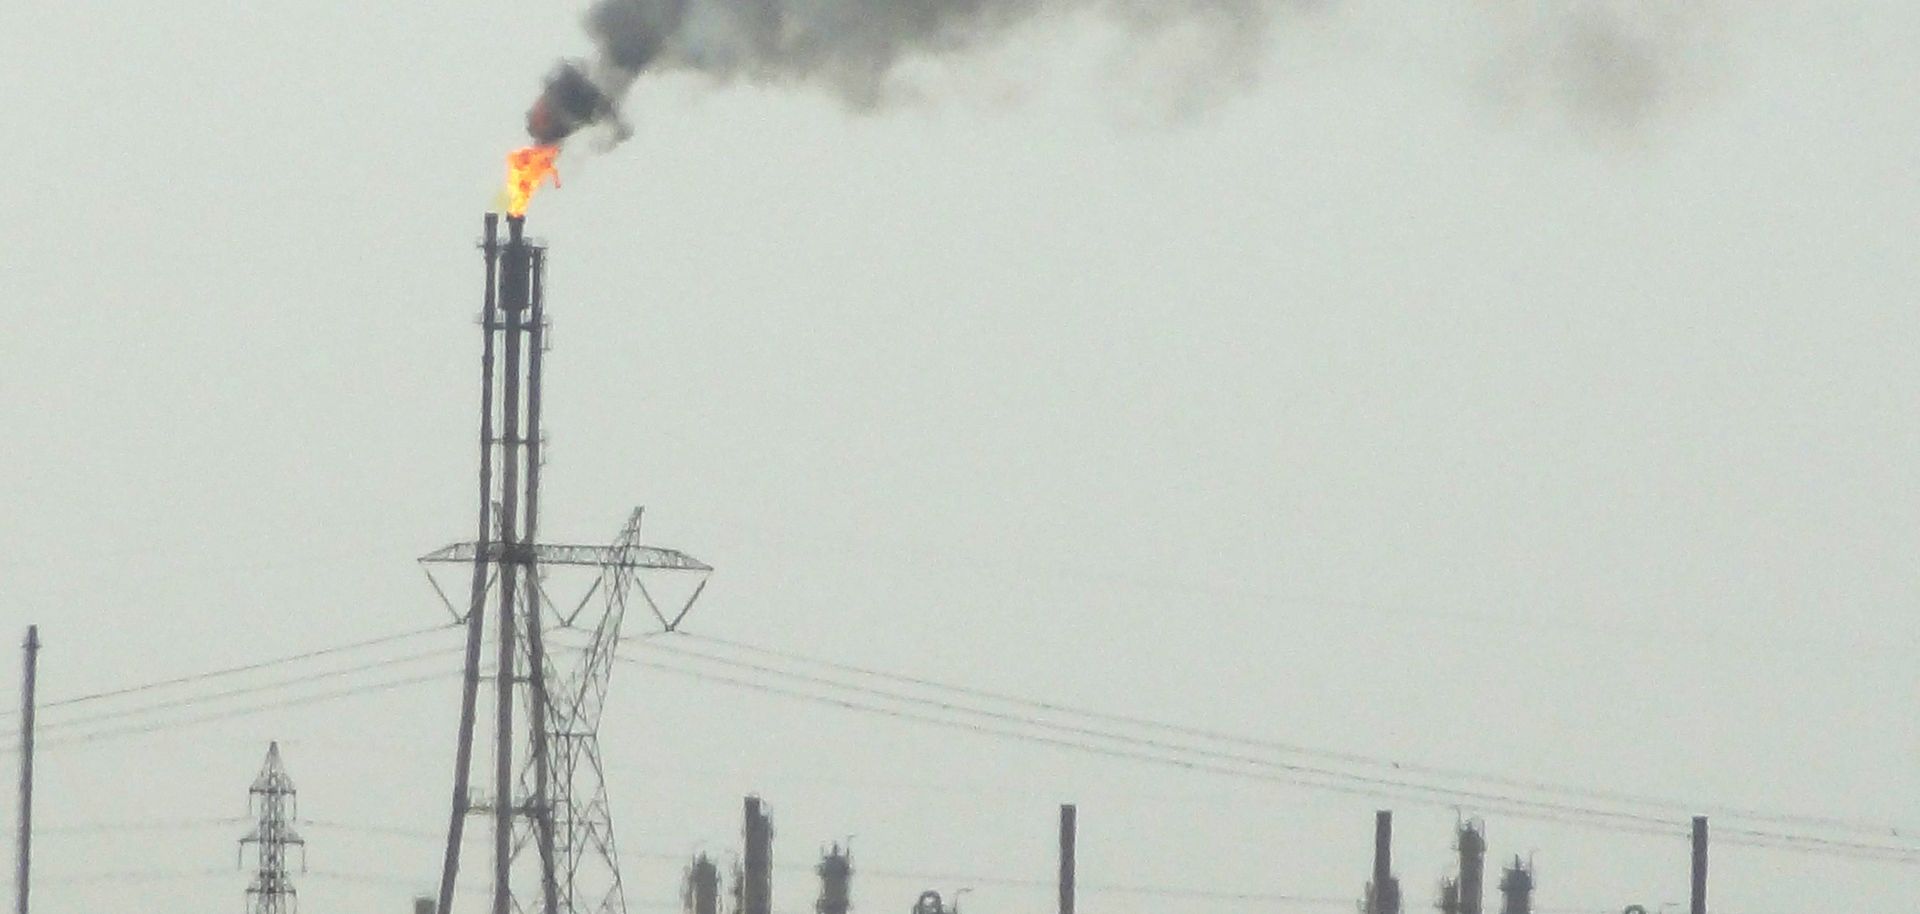 Kurdish Options Limited In Northern Oil Fields